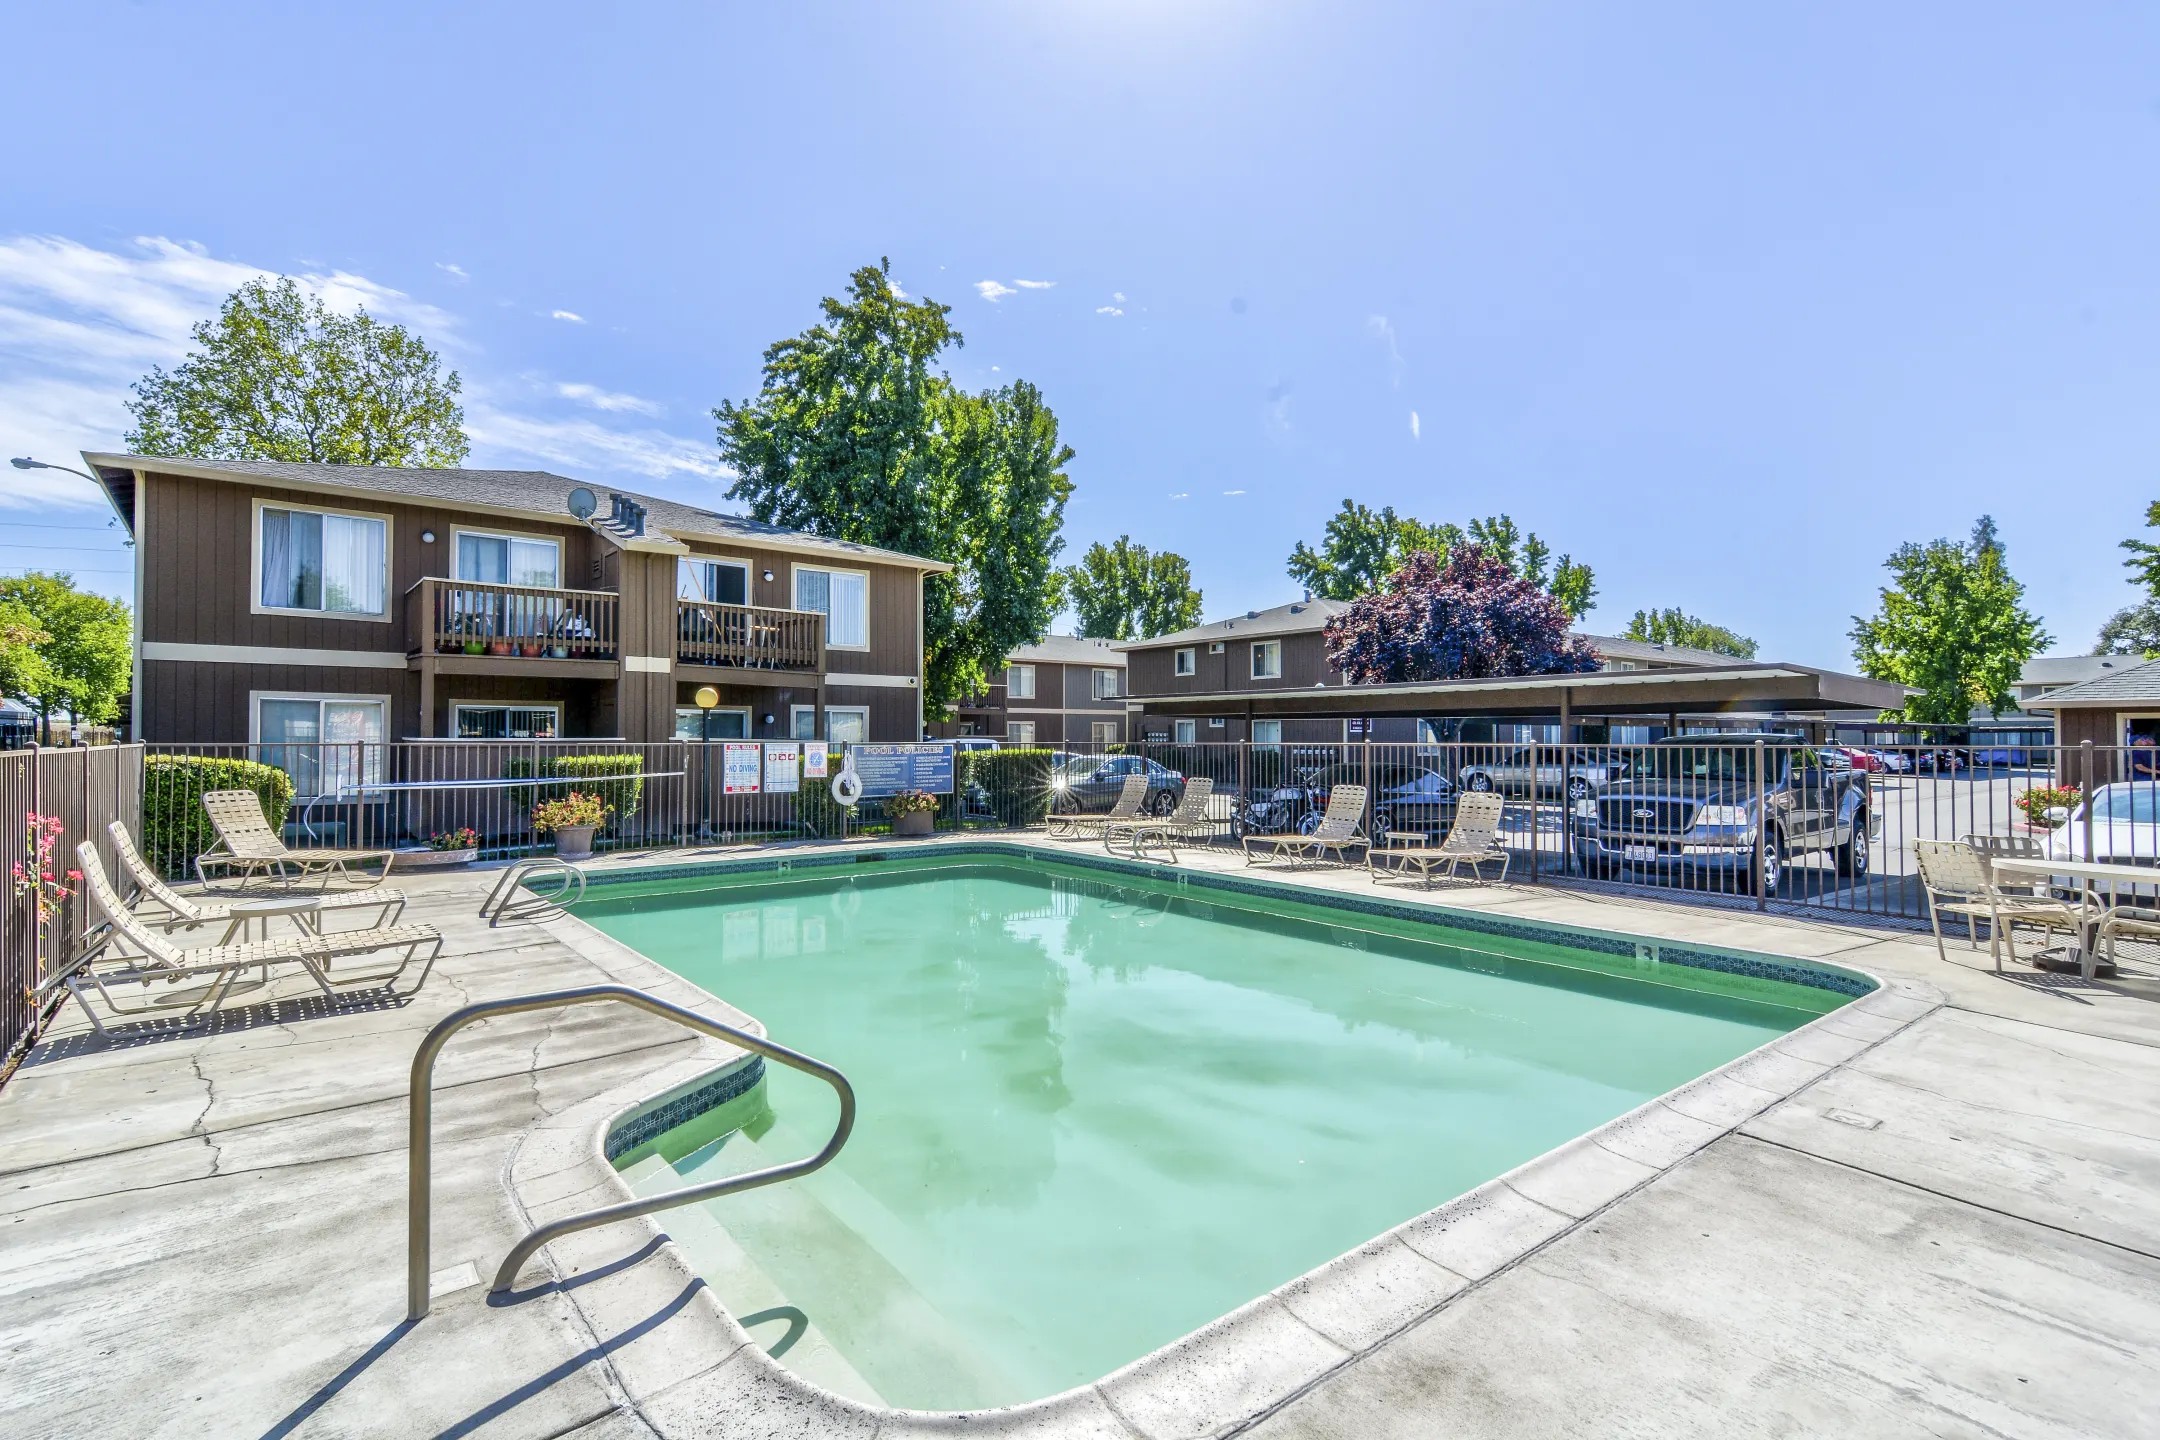 Pool - Riverbank Apartments - Stockton, CA